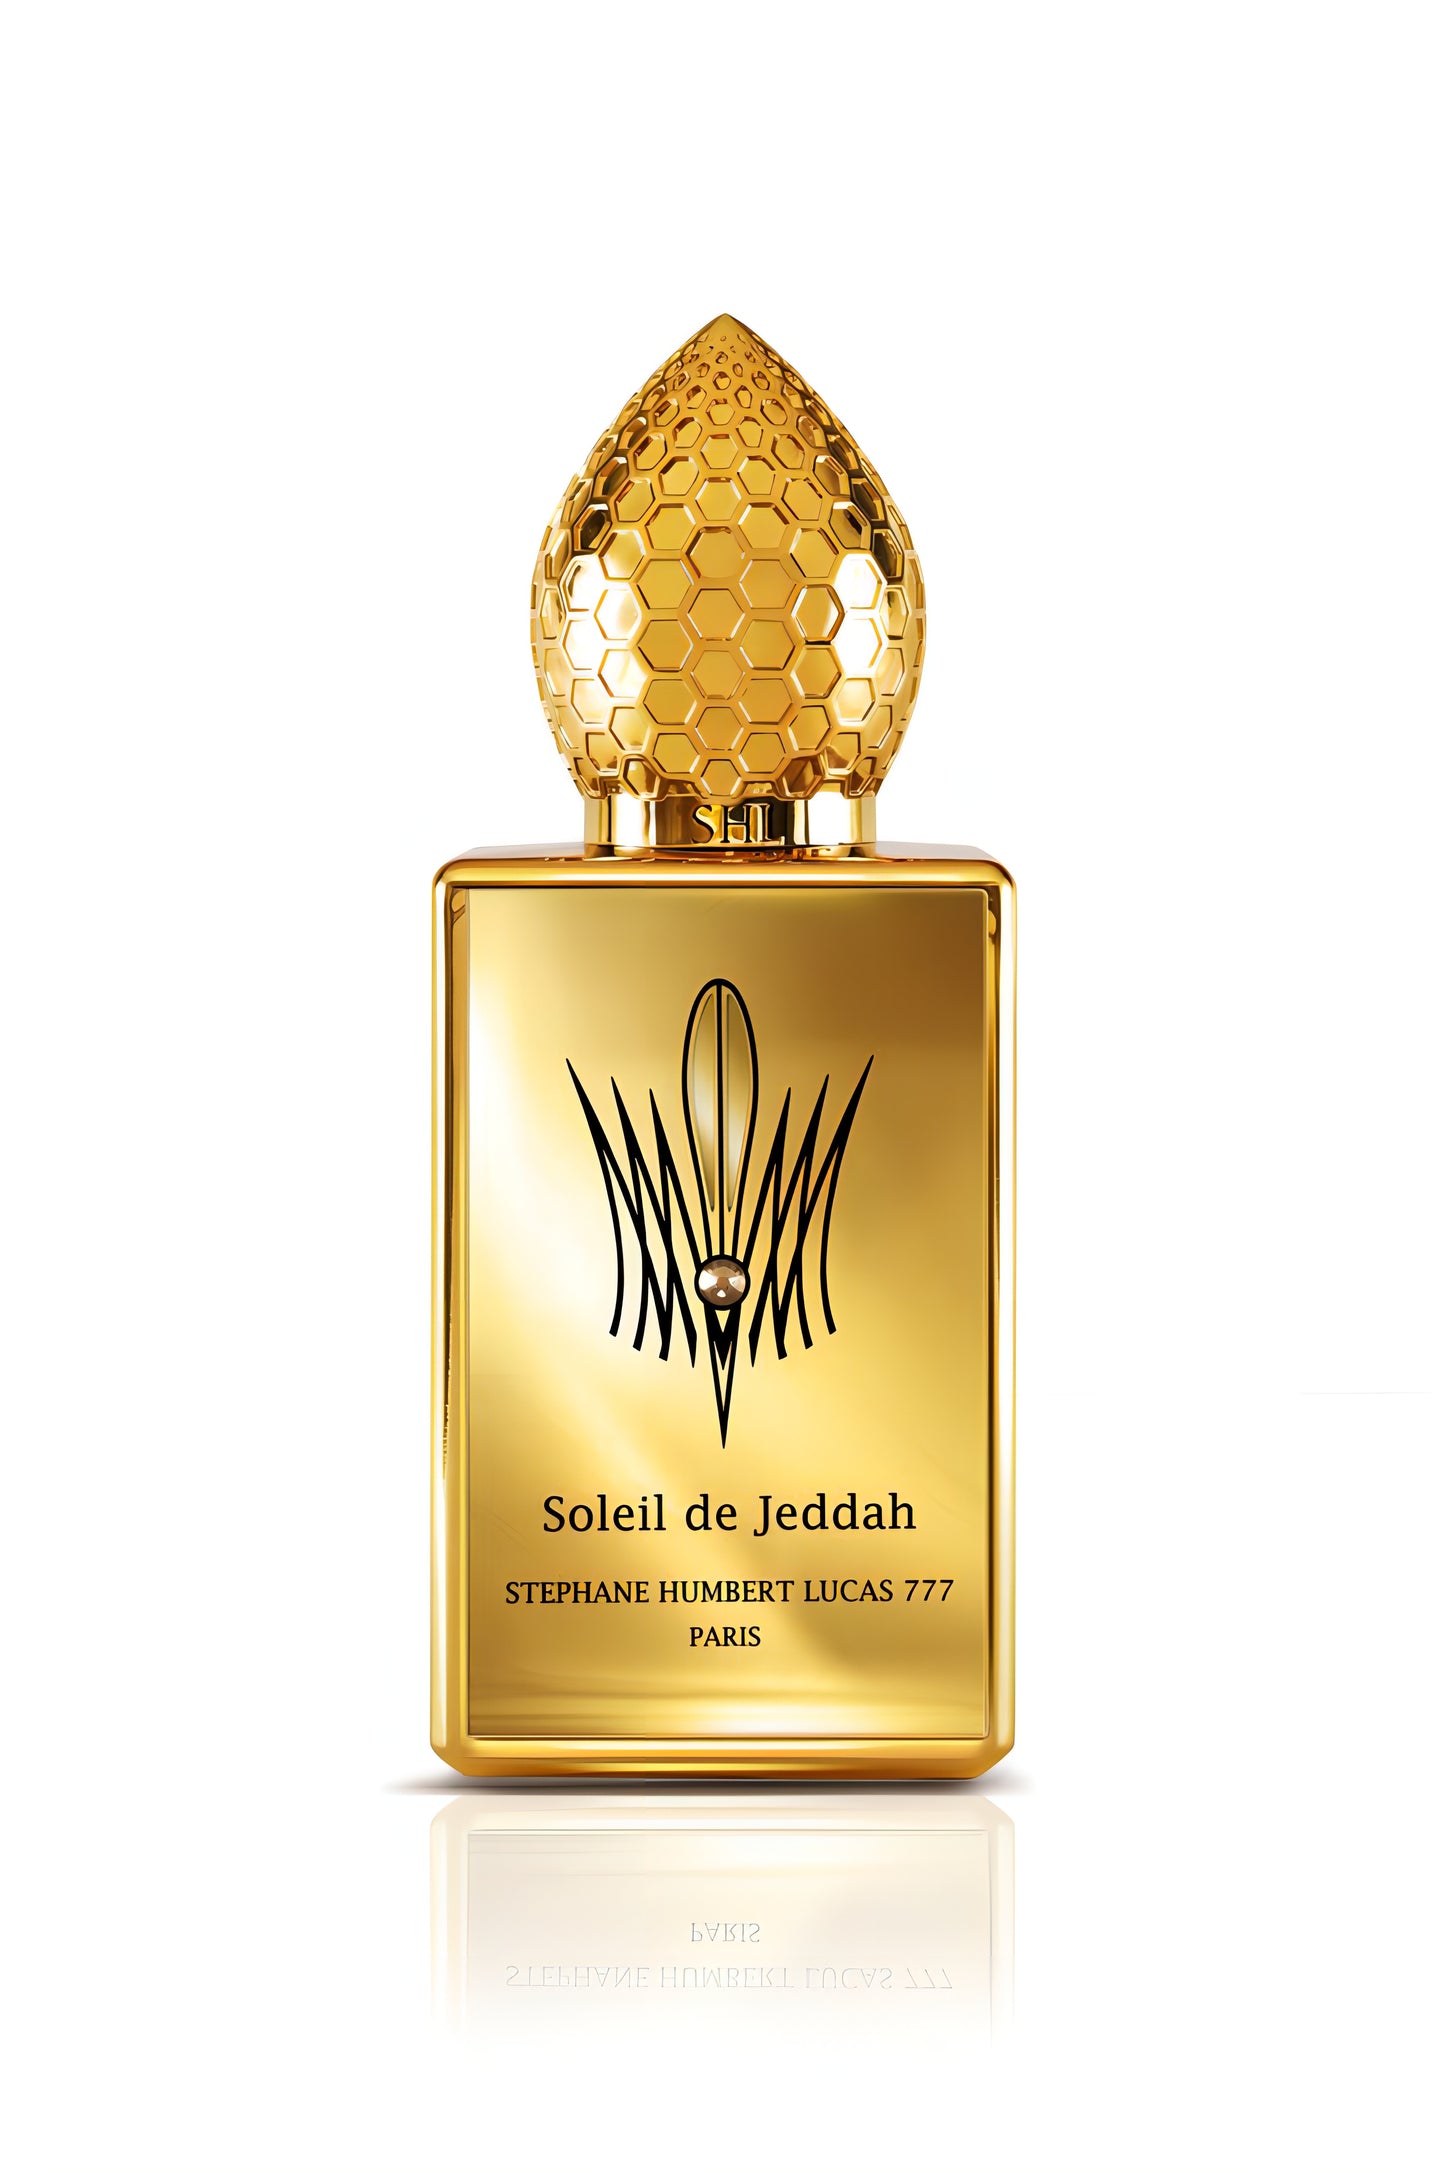 Soleil de Jeddah L'Original Stéphane Humbert Lucas - Tuxedo.no Niche Perfumes - Oslo Norway ON DEMAND BARBERS